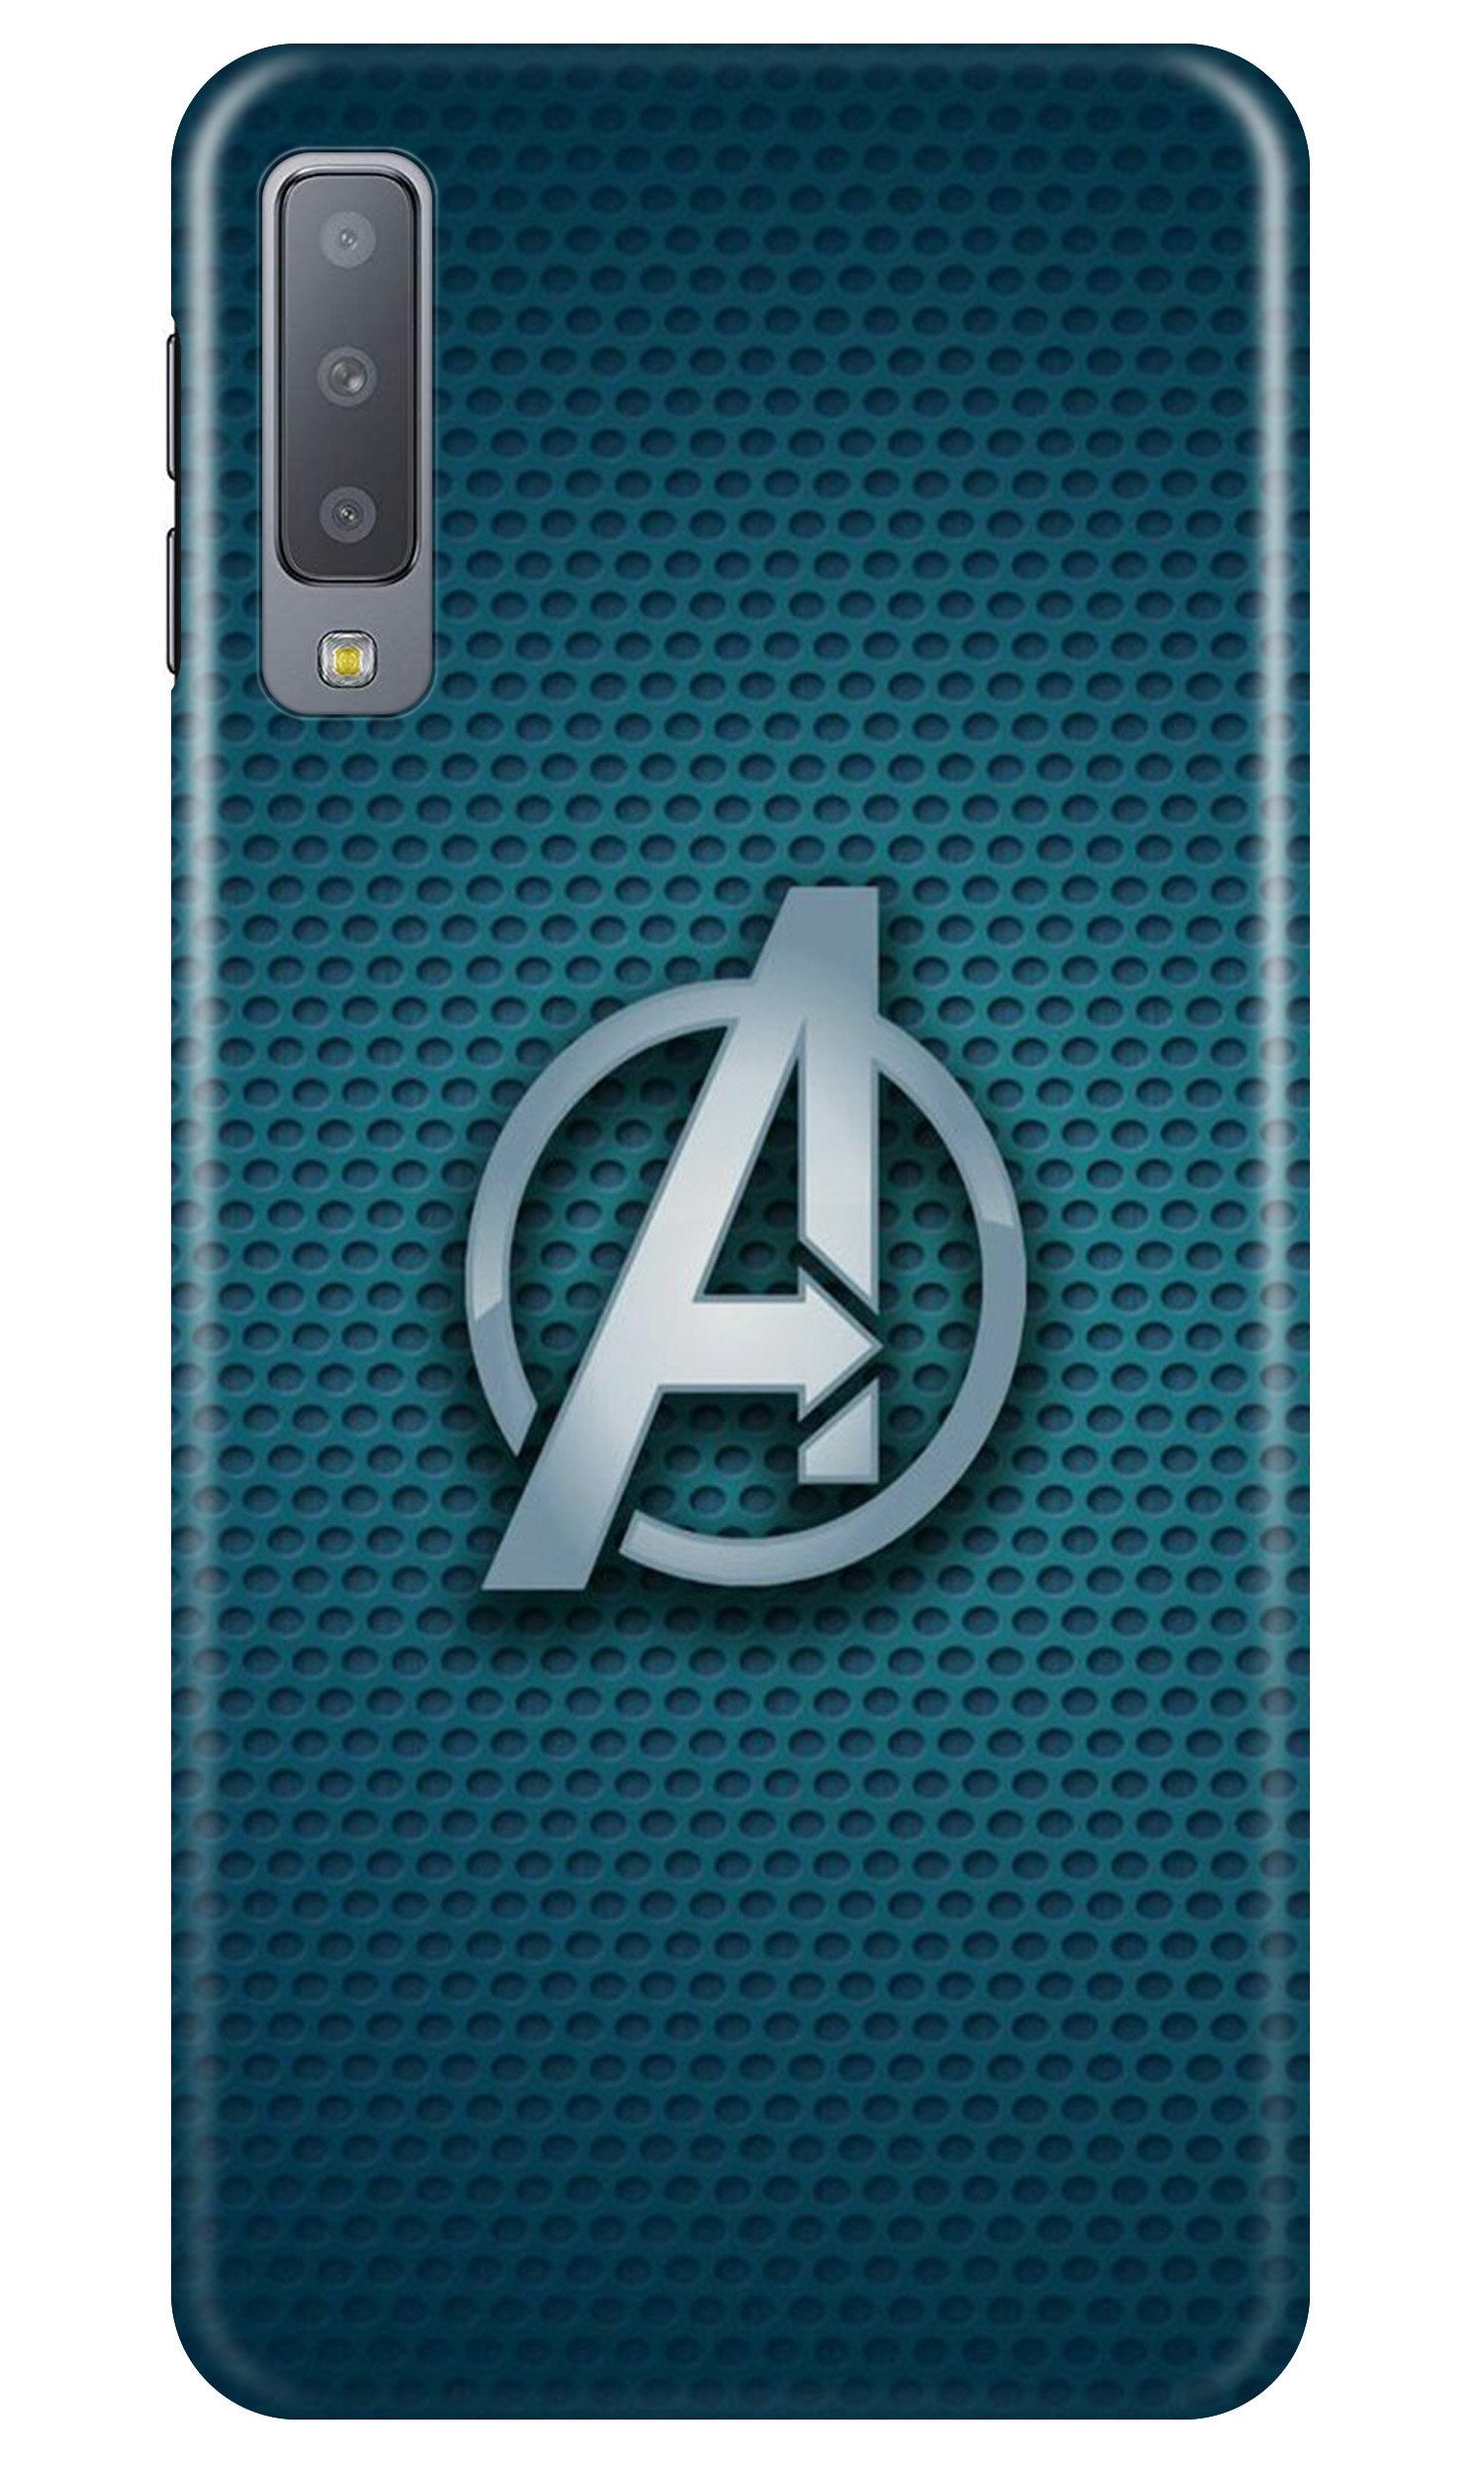 Avengers Case for Samung Galaxy A70s (Design No. 246)